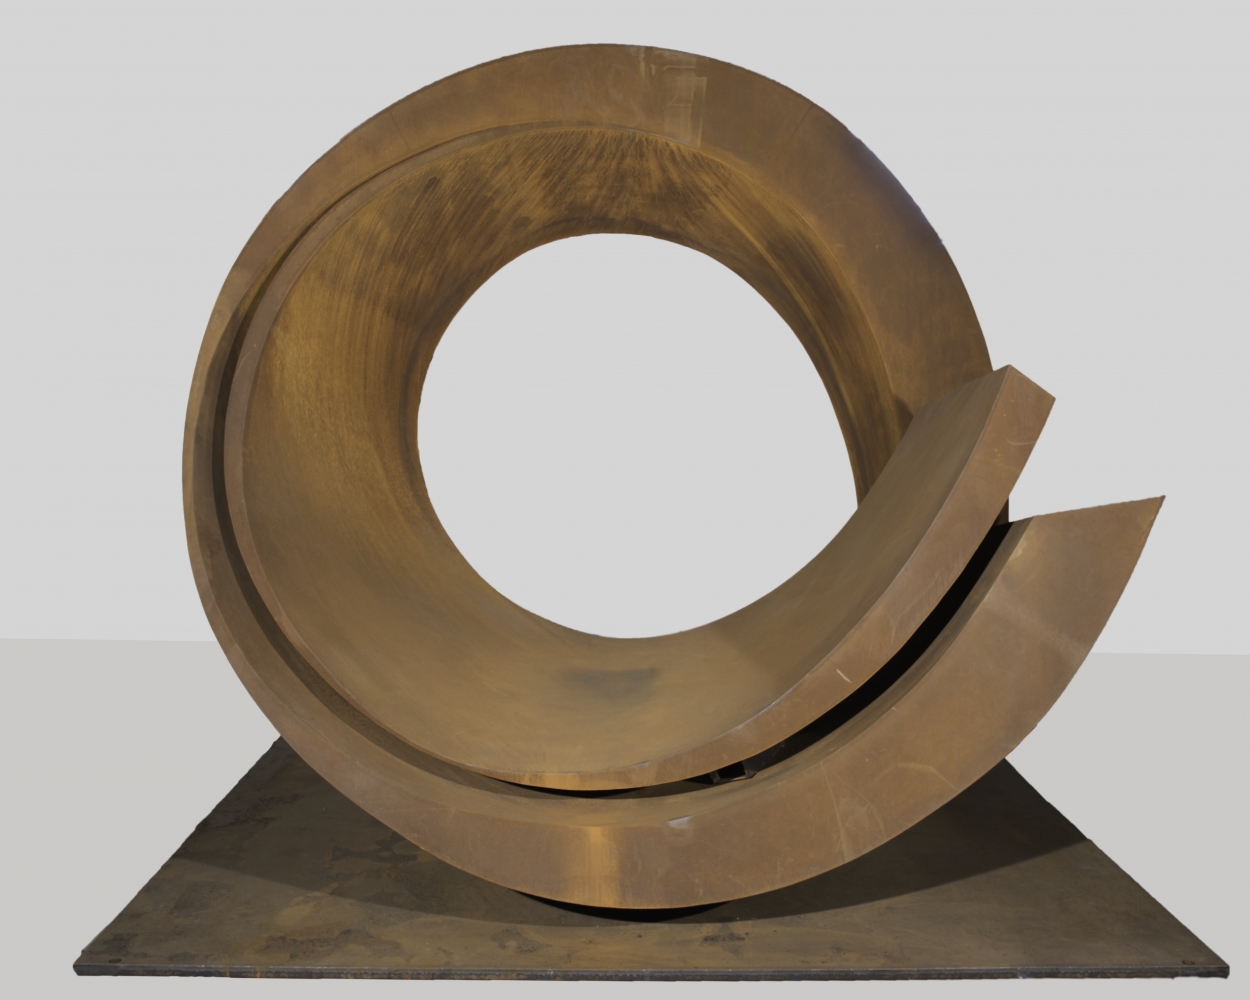 Curvae in Curvae, 2013-2018

Cor-Ten steel, edition&amp;nbsp;of 3

106 3/4 x 118 1/8 x 90 3/4 in. / 271.1 x 300 x 230.5 cm